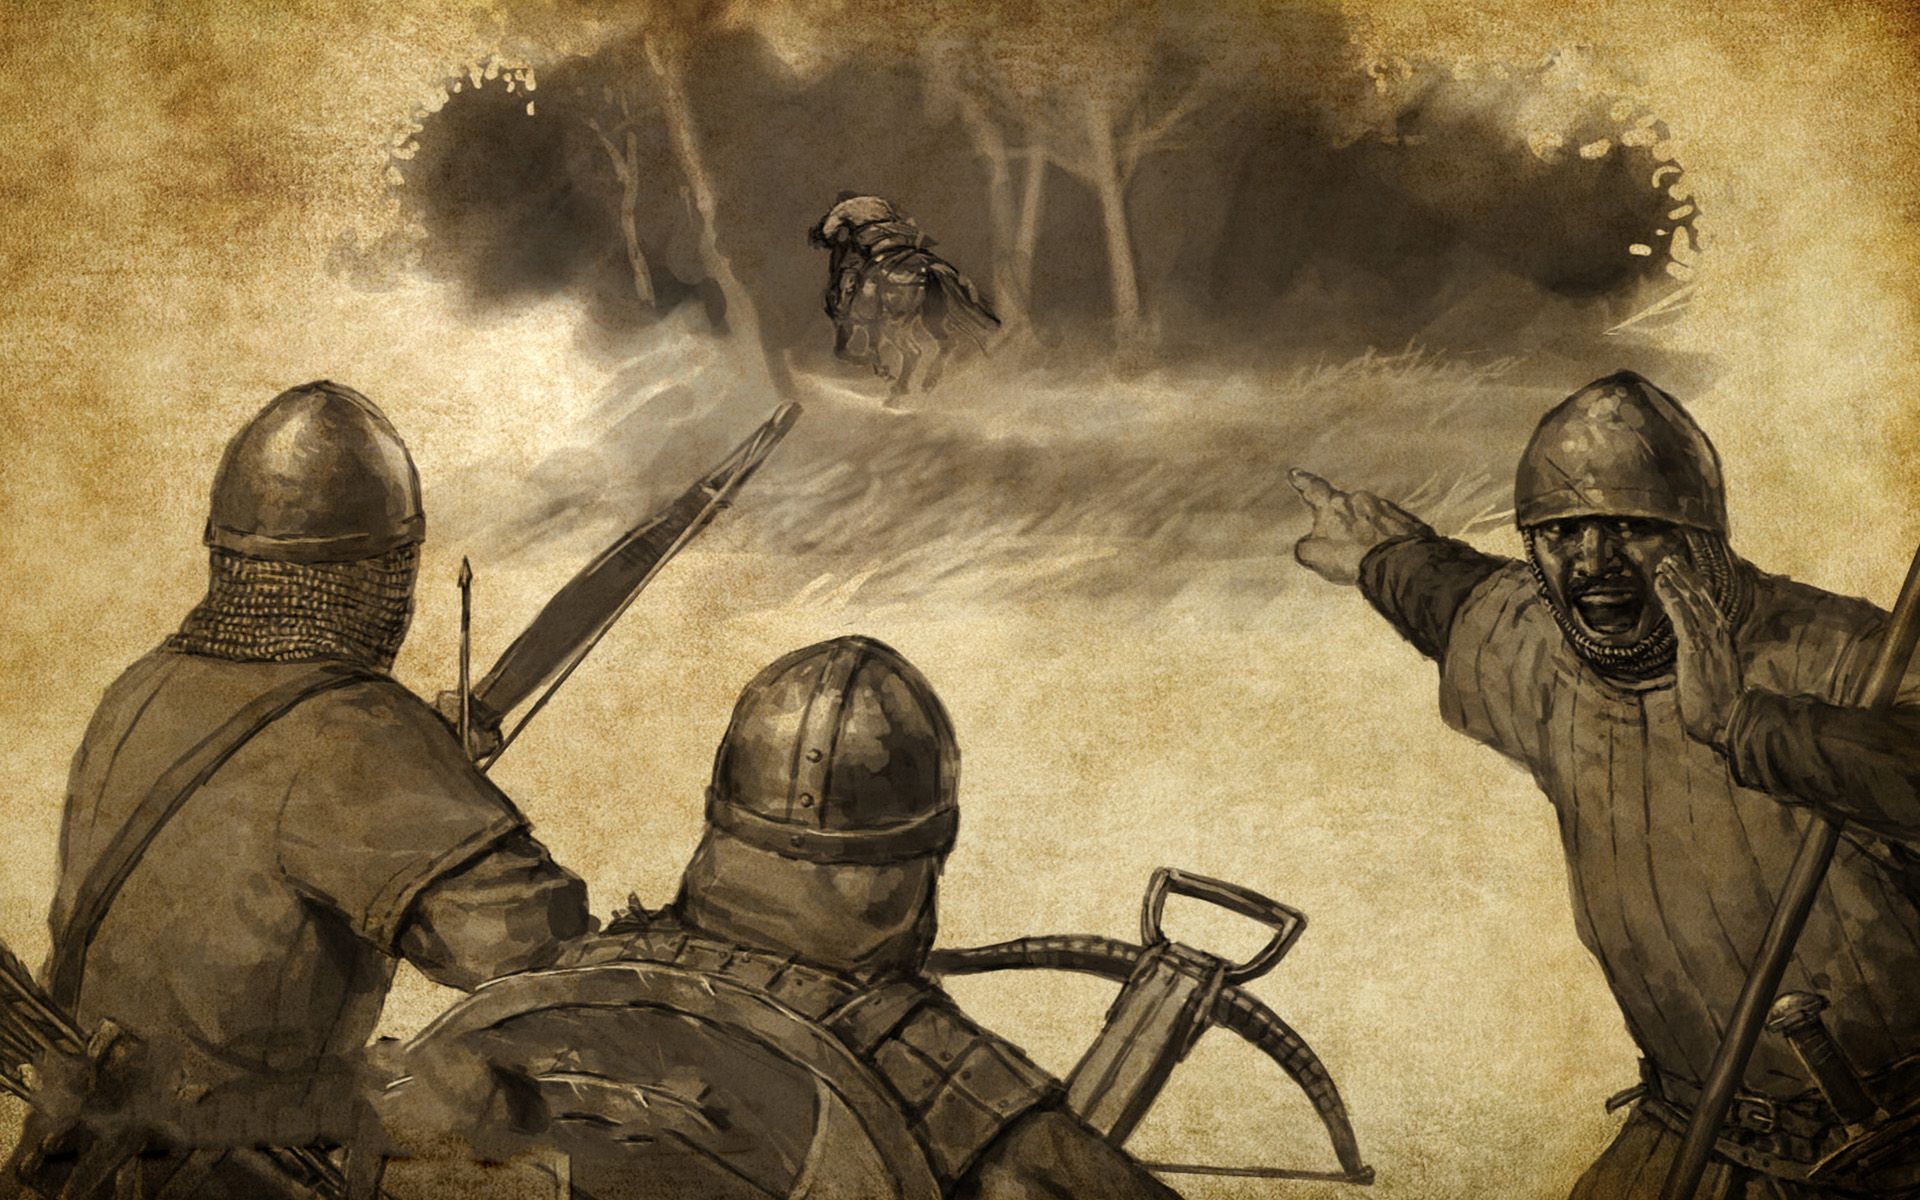 Soldiers archers mount&blade artwork medieval wallpaper ...